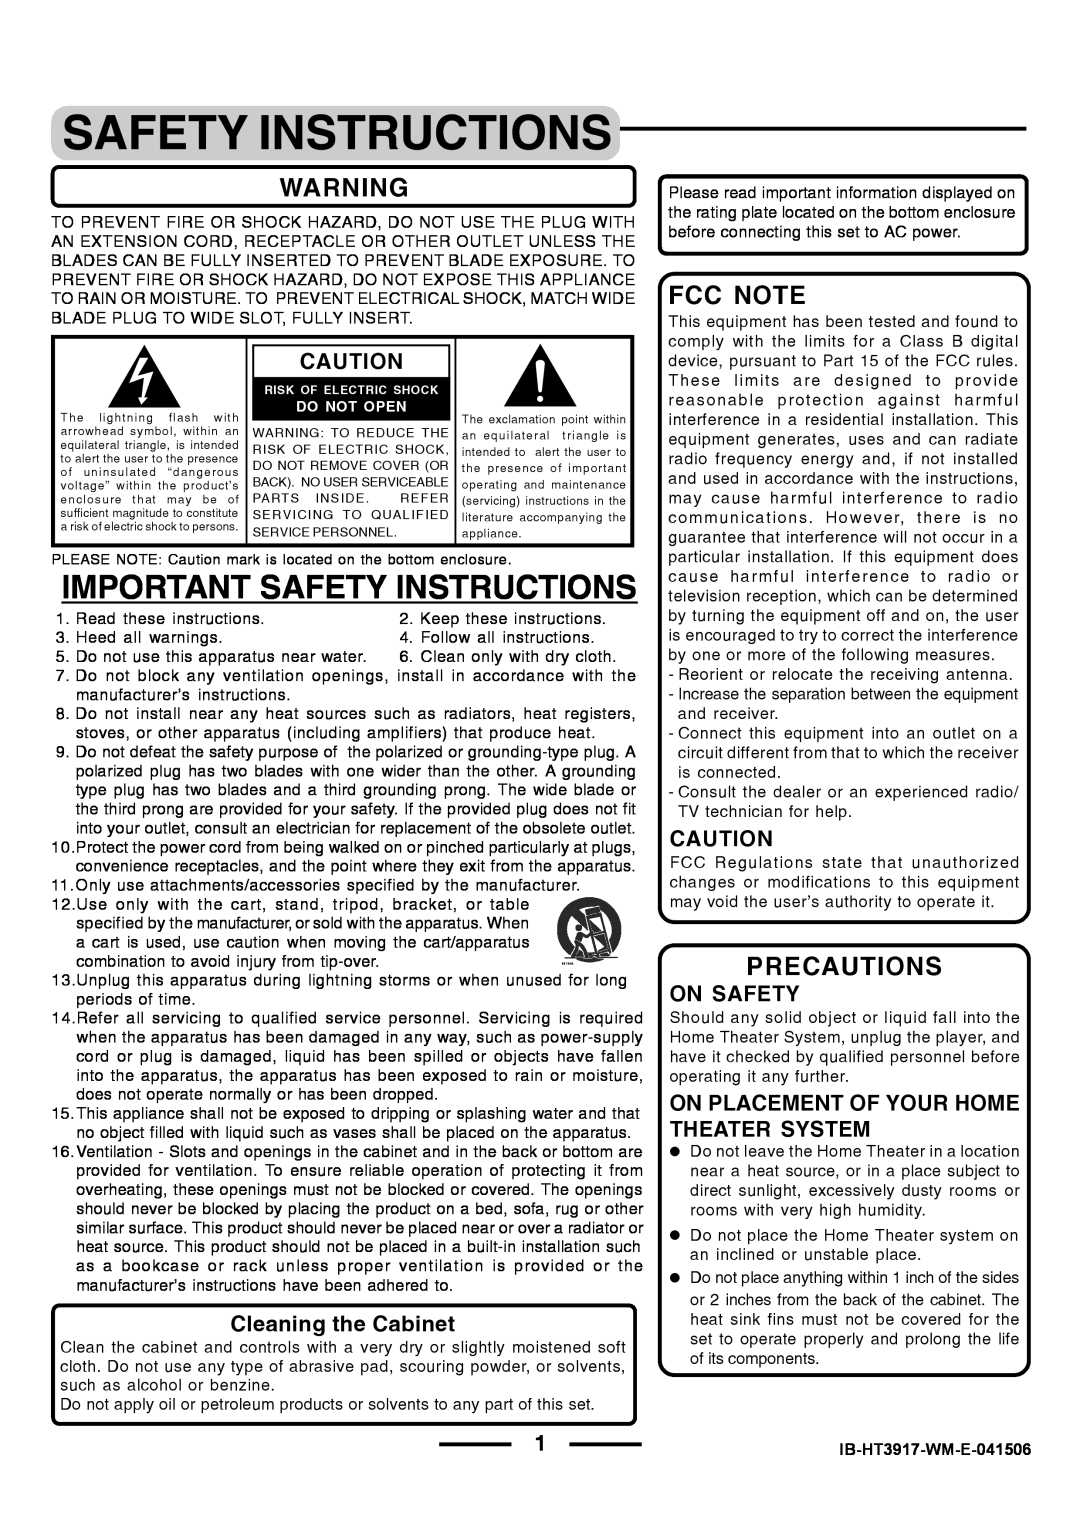 Lenoxx Electronics HT3917 manual Fcc Note, Precautions, Important Safety Instructions 